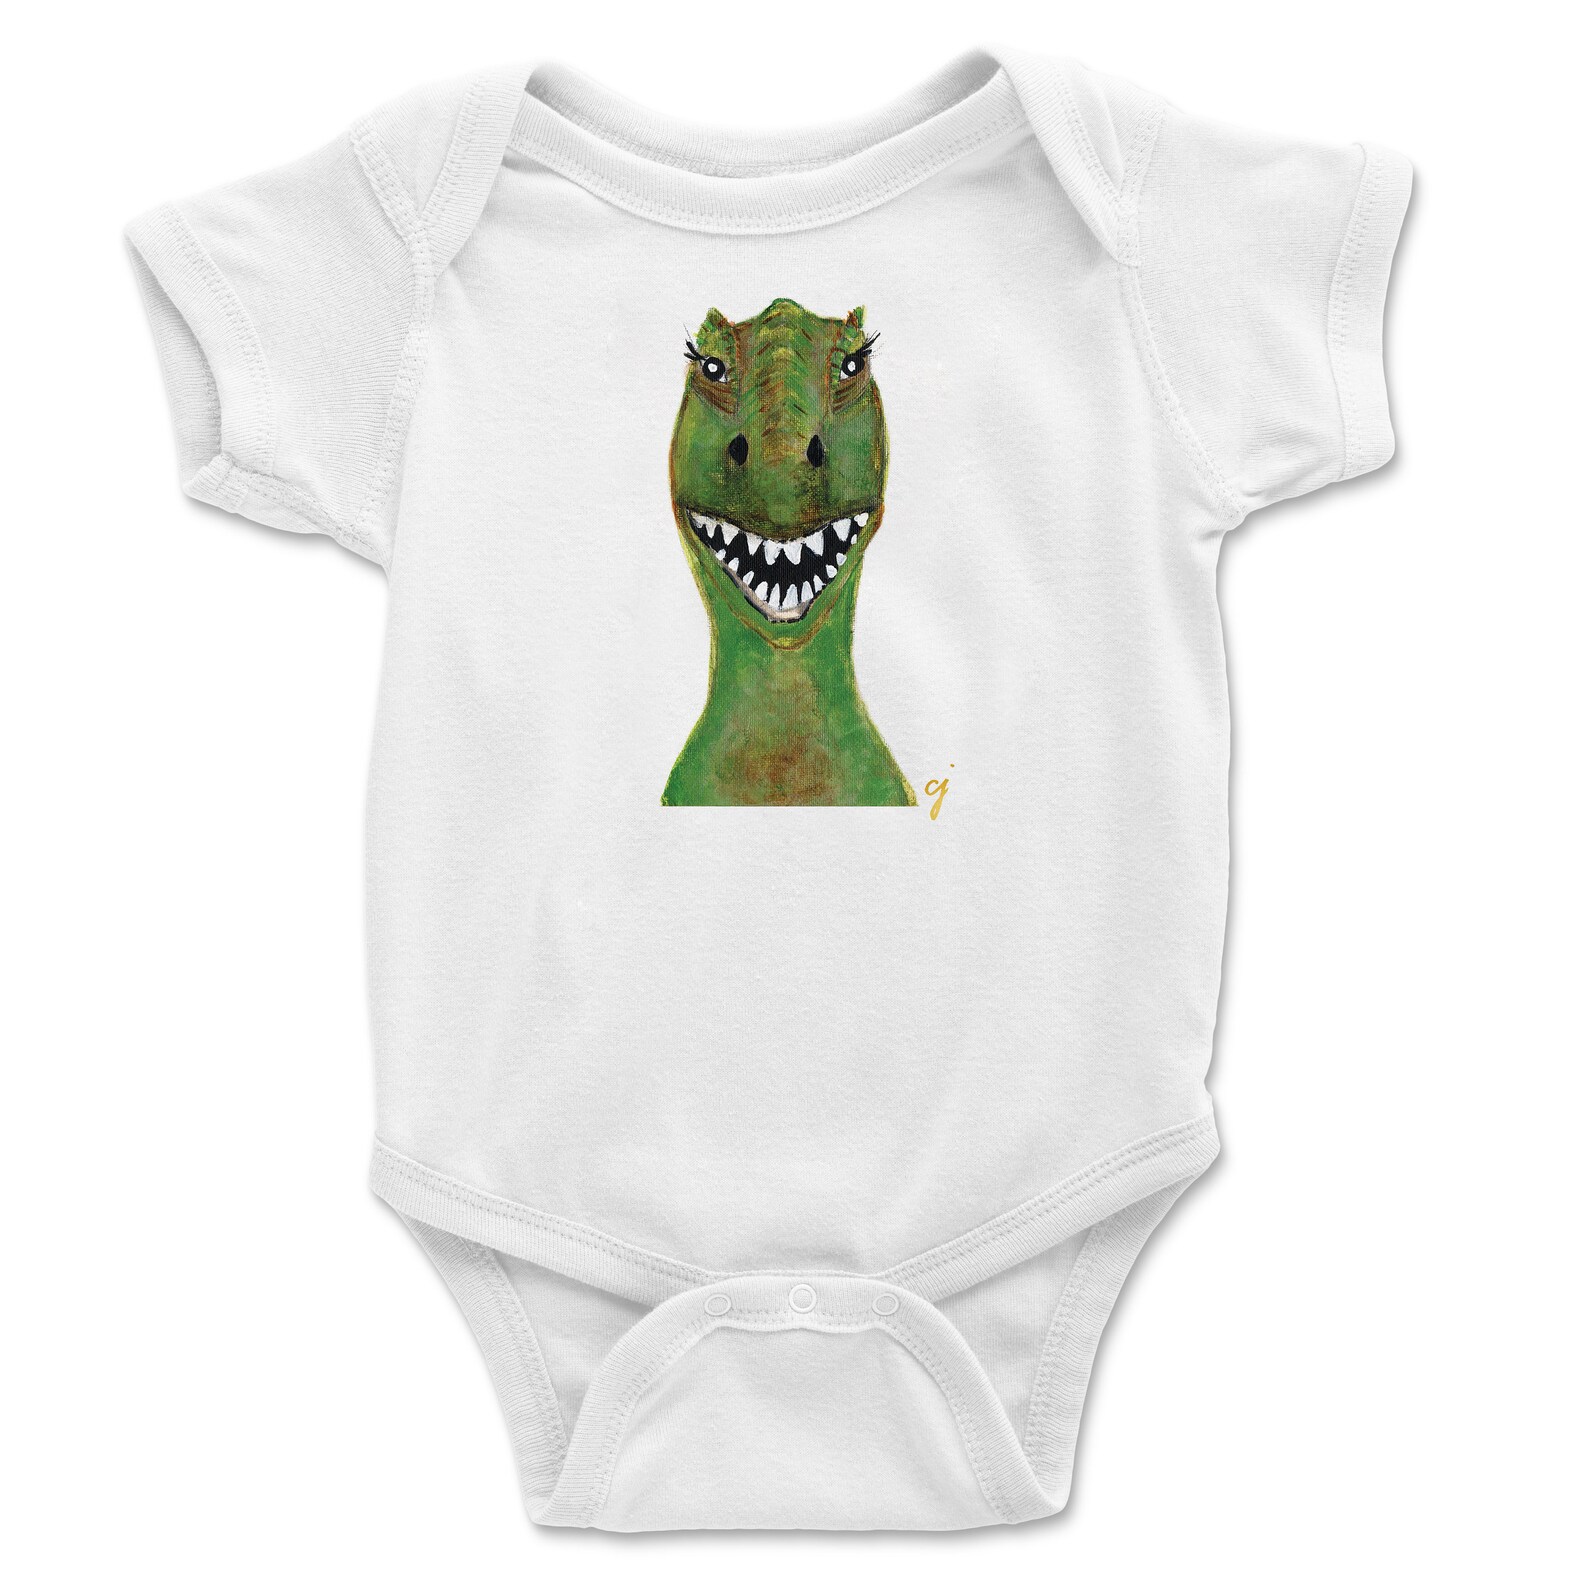 Dino trex onesie unisex animal baby clothing | Etsy